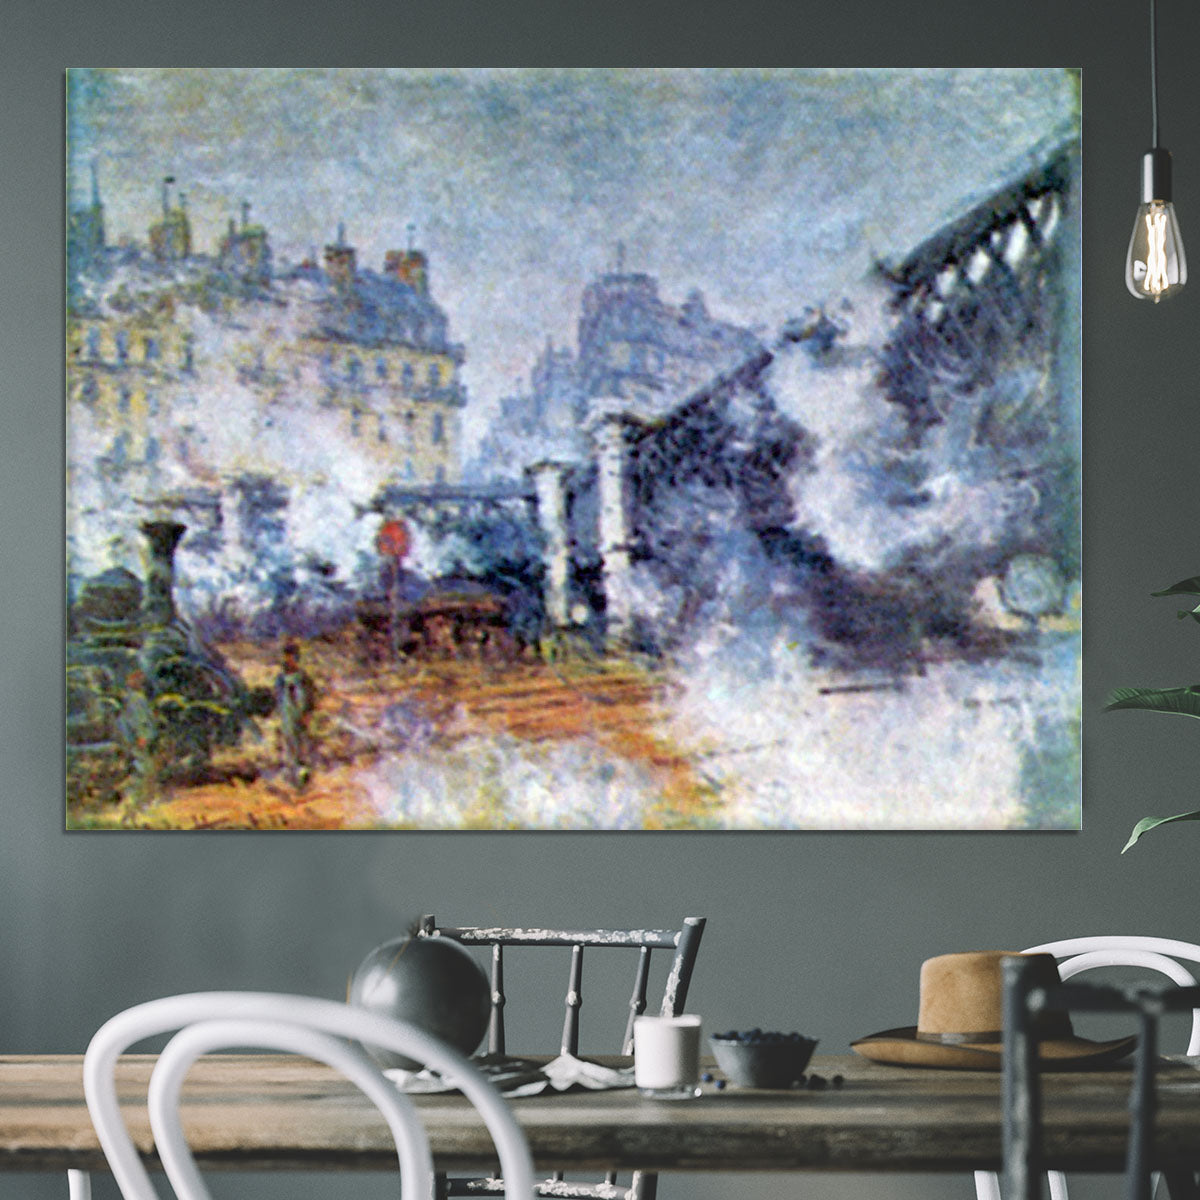 The Europe Bridge Saint Lazare station in Paris by Monet Canvas Print or Poster - Canvas Art Rocks - 3